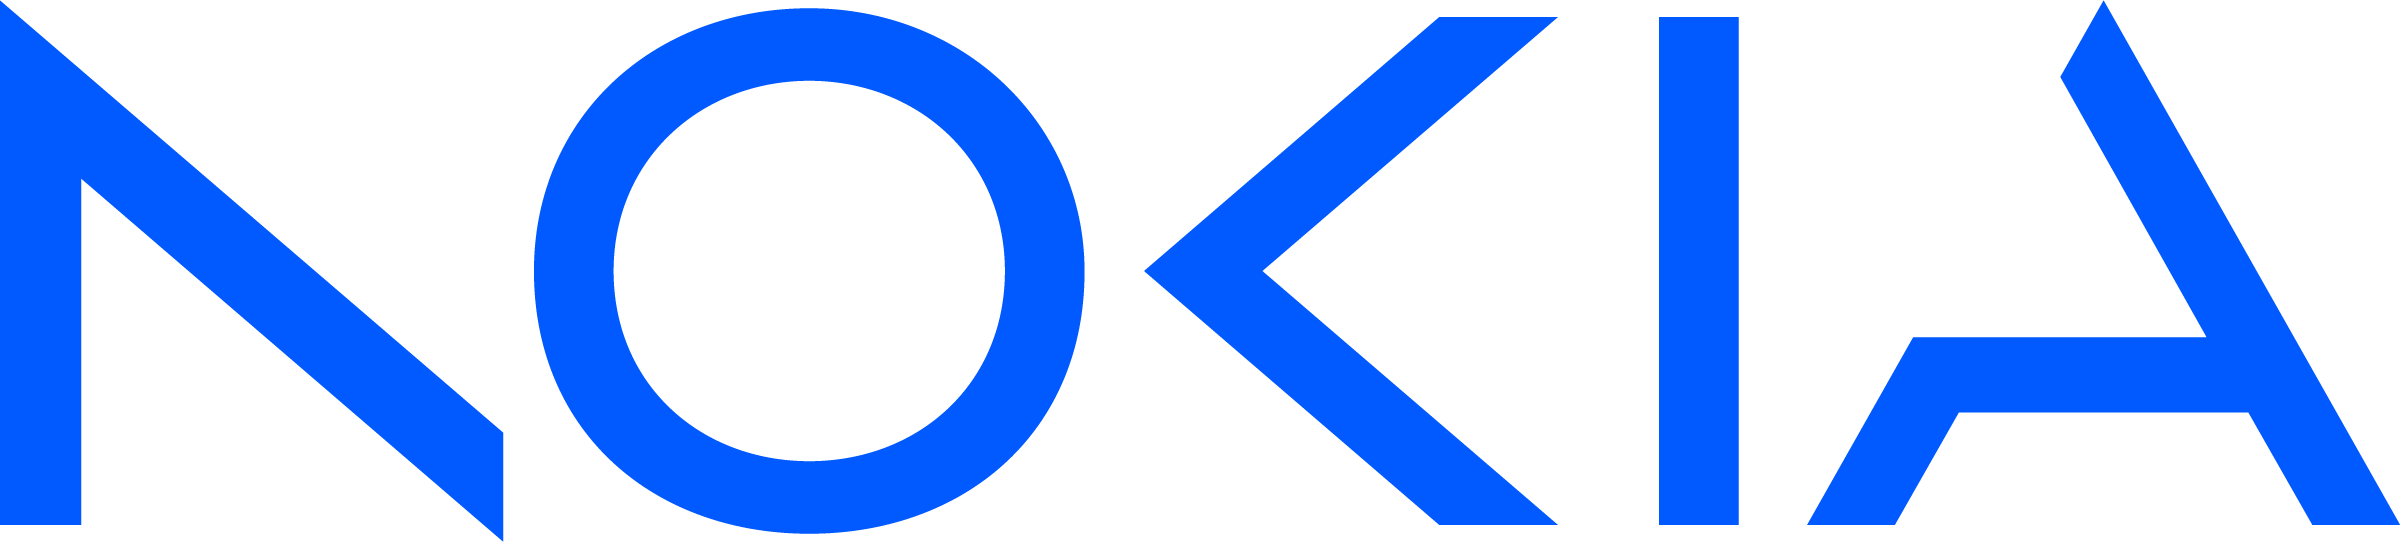 Nokia logo RGB_Bright blue